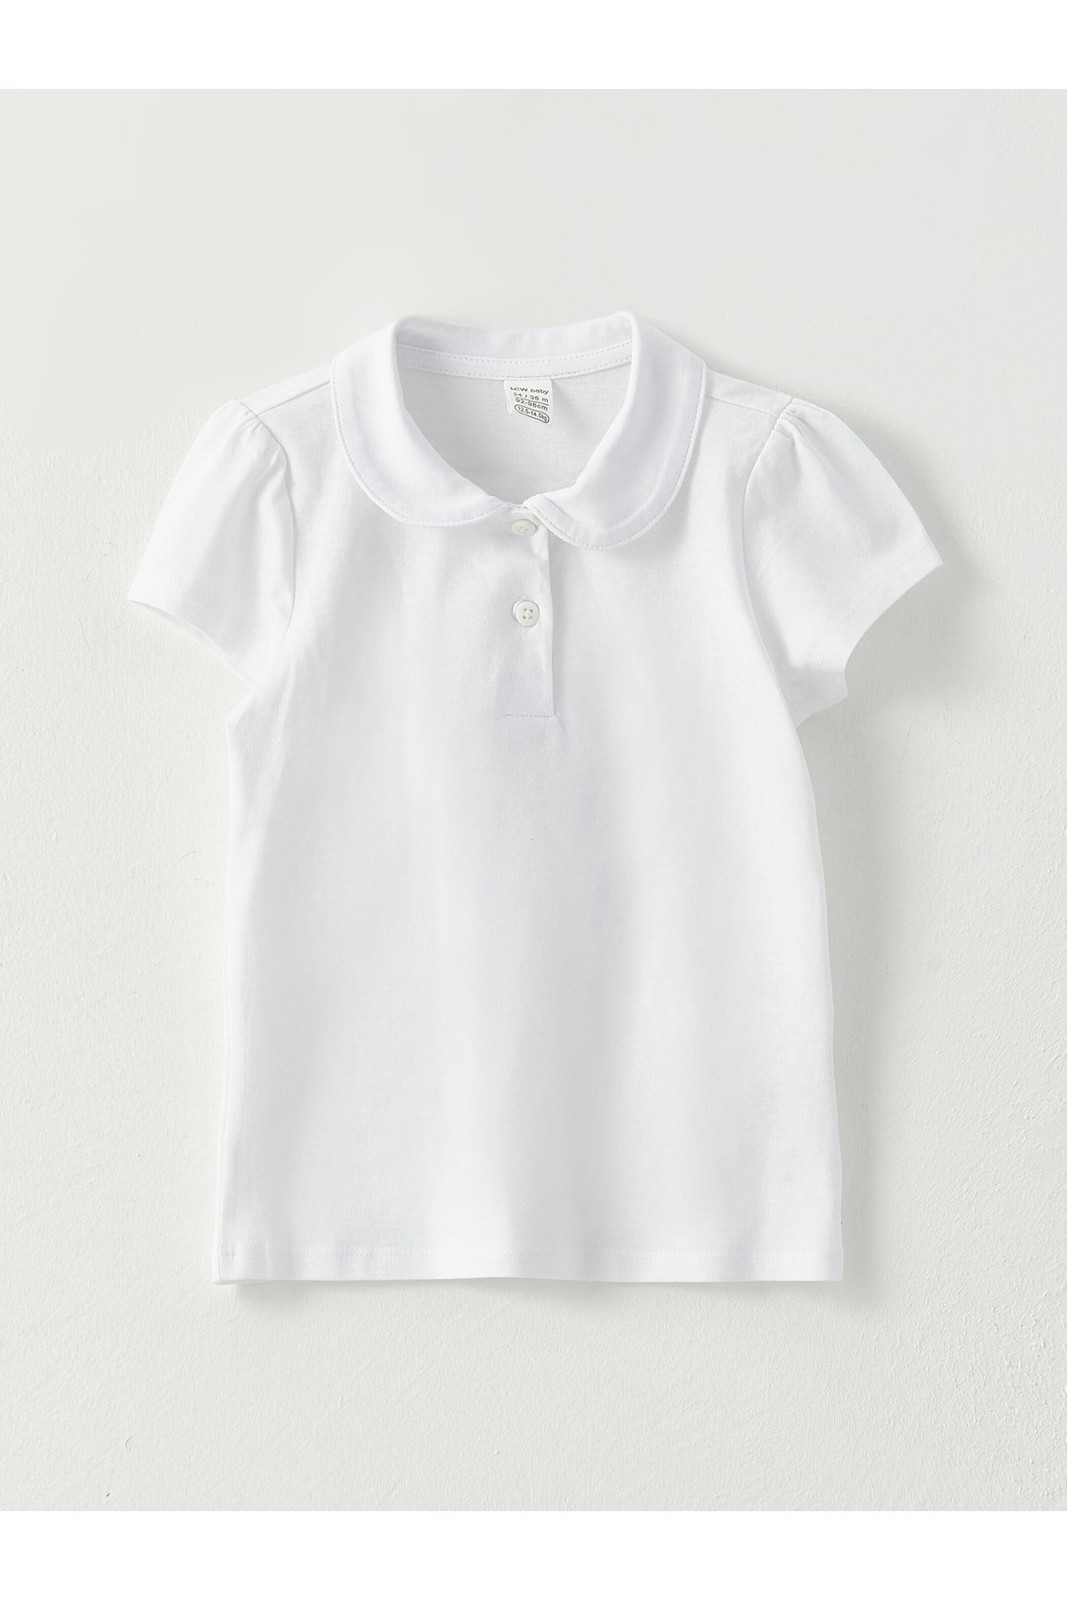 LC Waikiki Basic Baby Girl T-Shirt with Baby Collar Short Sleeves.